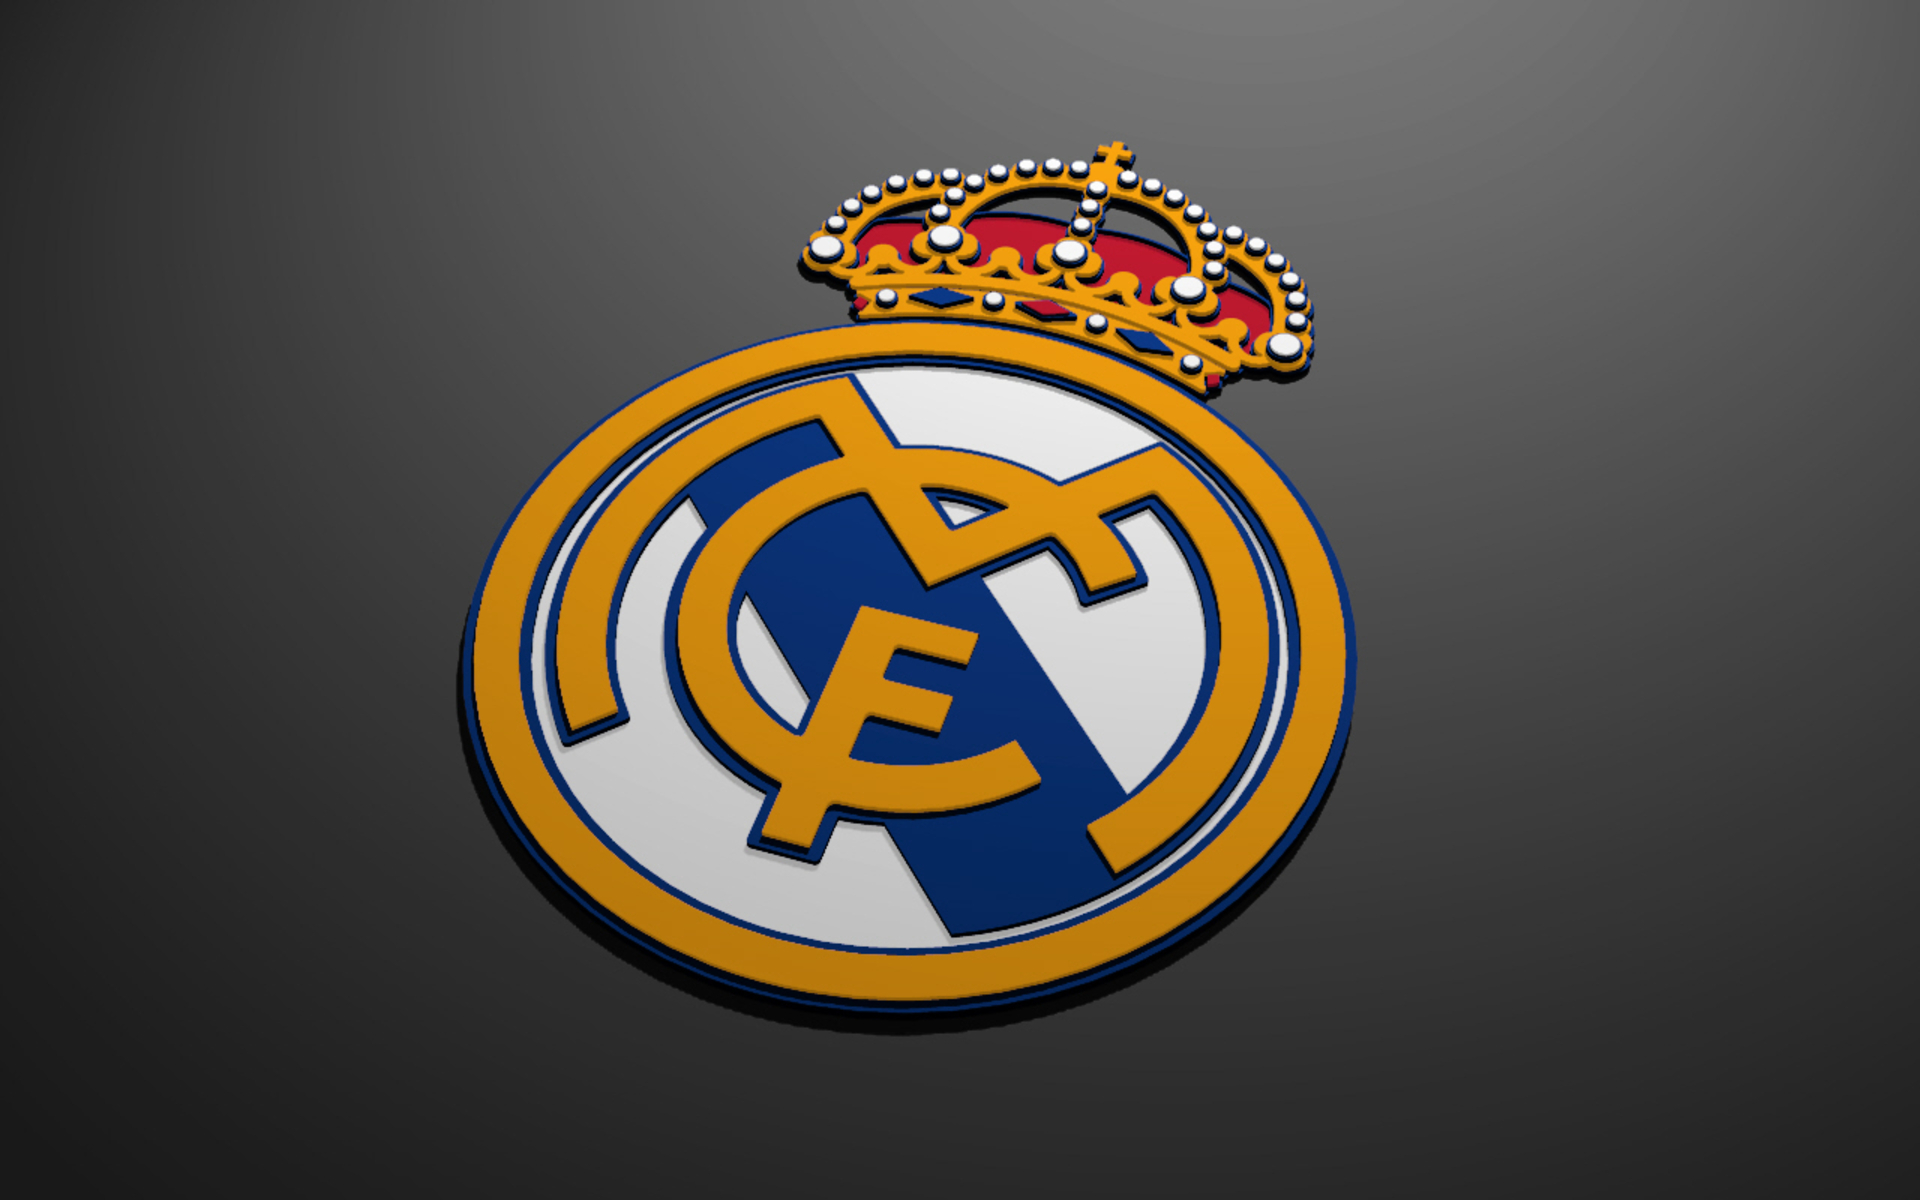 Real Madrid Logo Football Club | PixelsTalk.Net